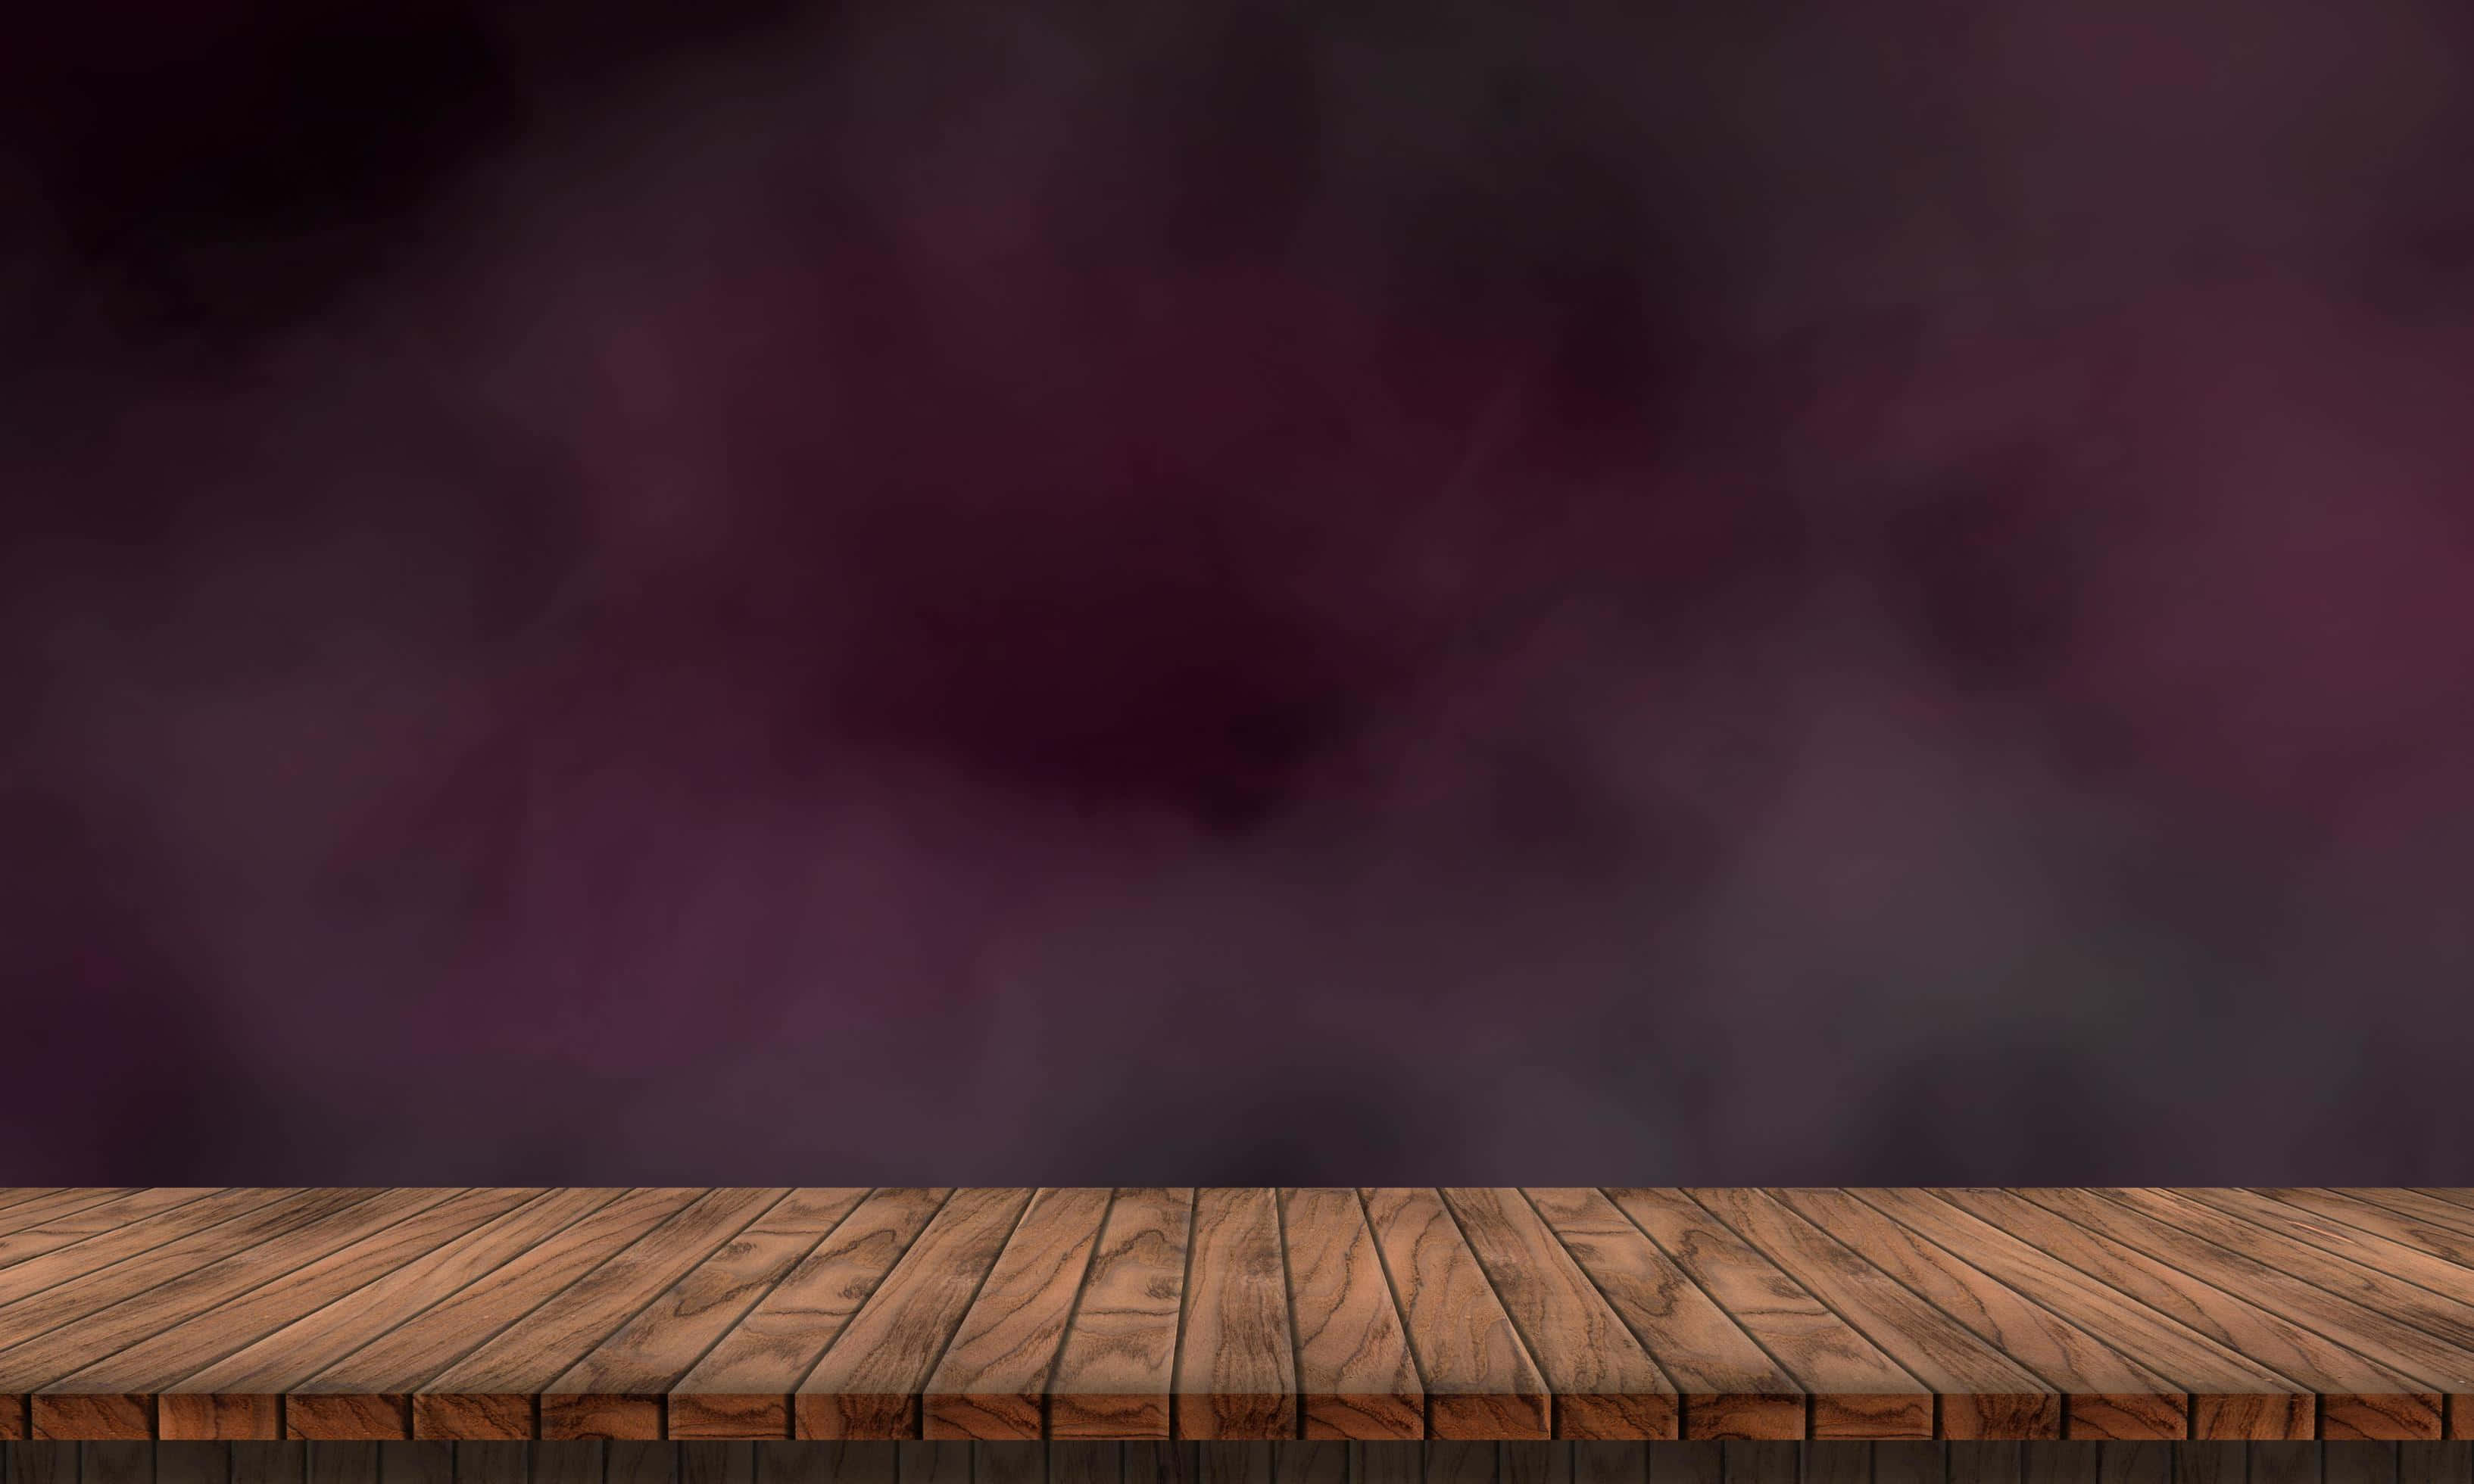 Smoky Background Wooden Platform